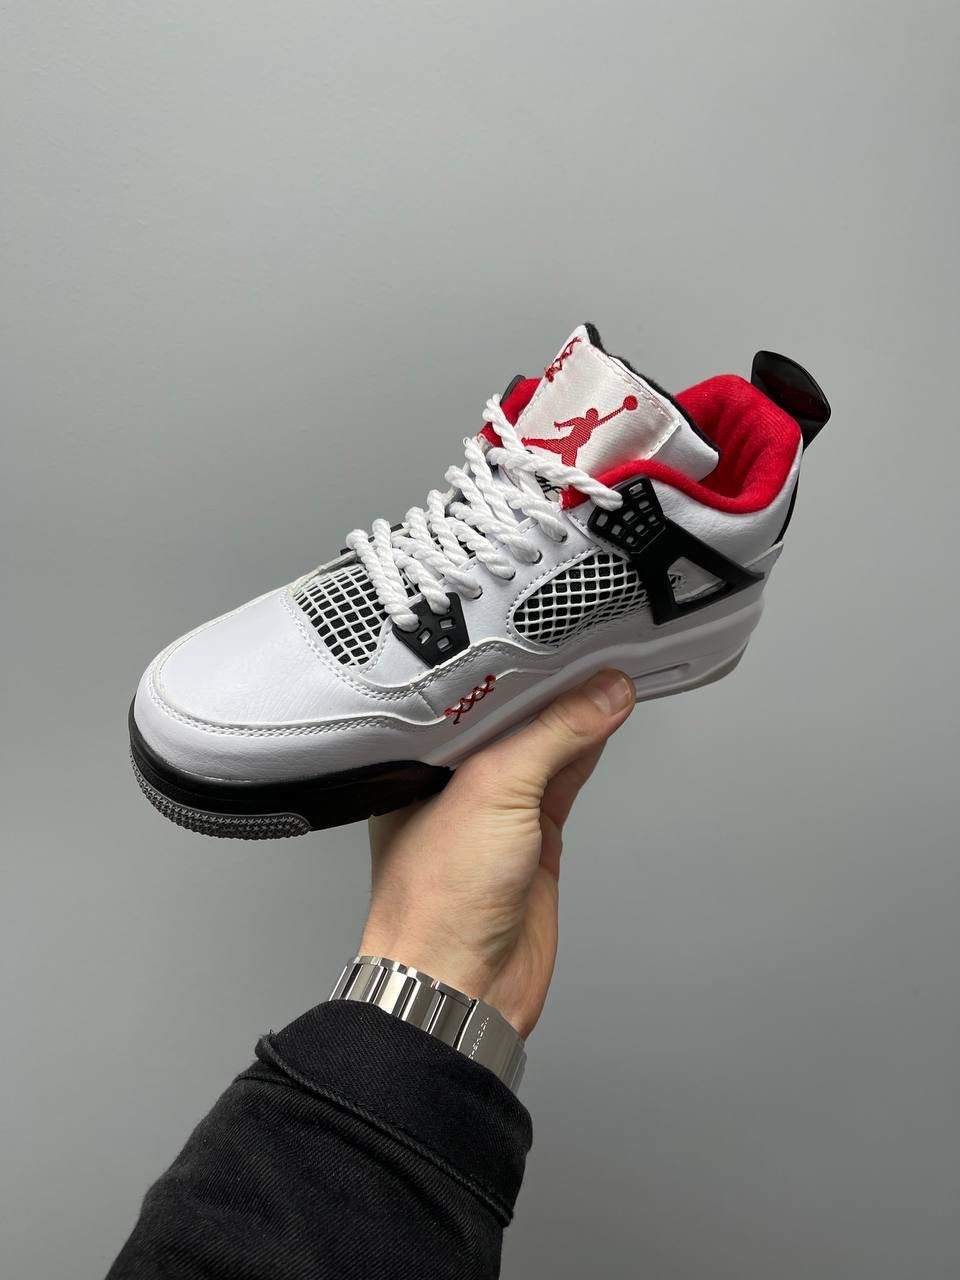 Nike Air Jordan 4 Chunky Lace Buty damskie , męskie trampki 36-45